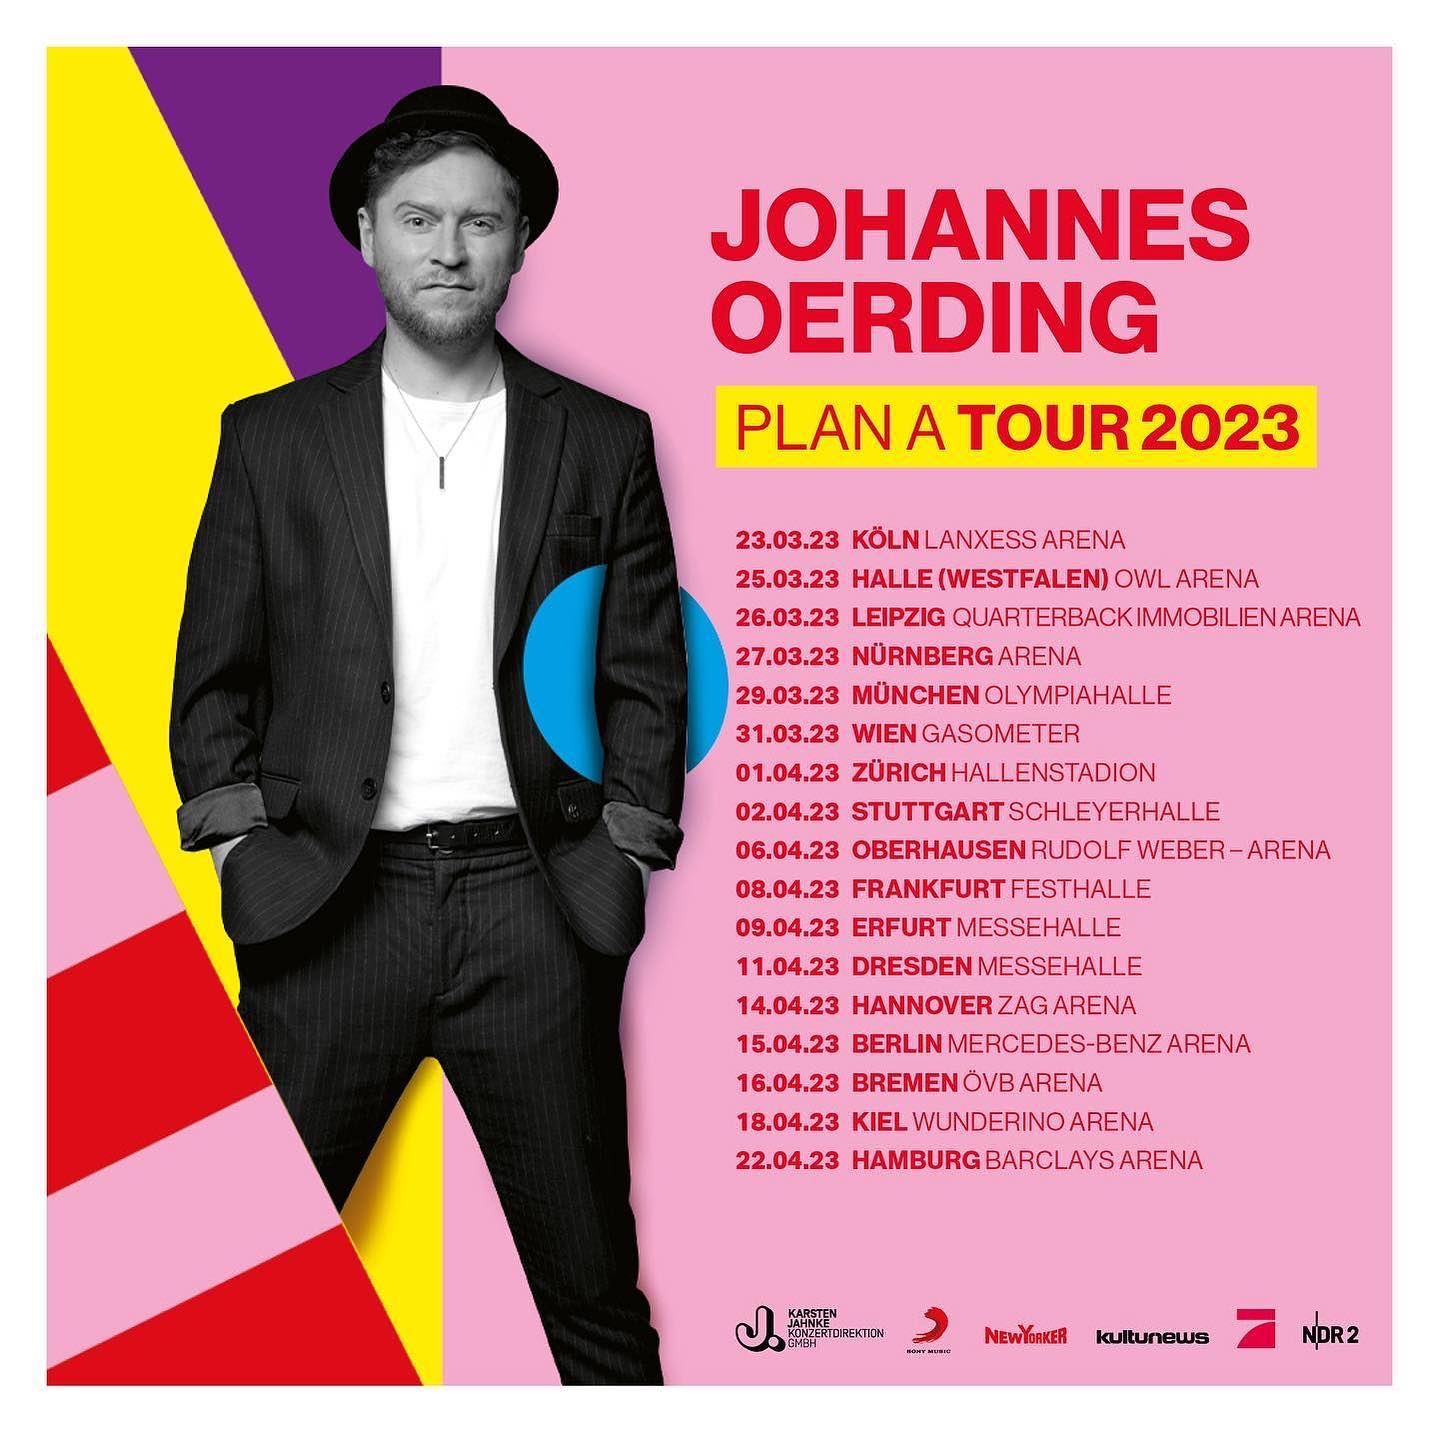 johannes oerding tour 2023 bielefeld